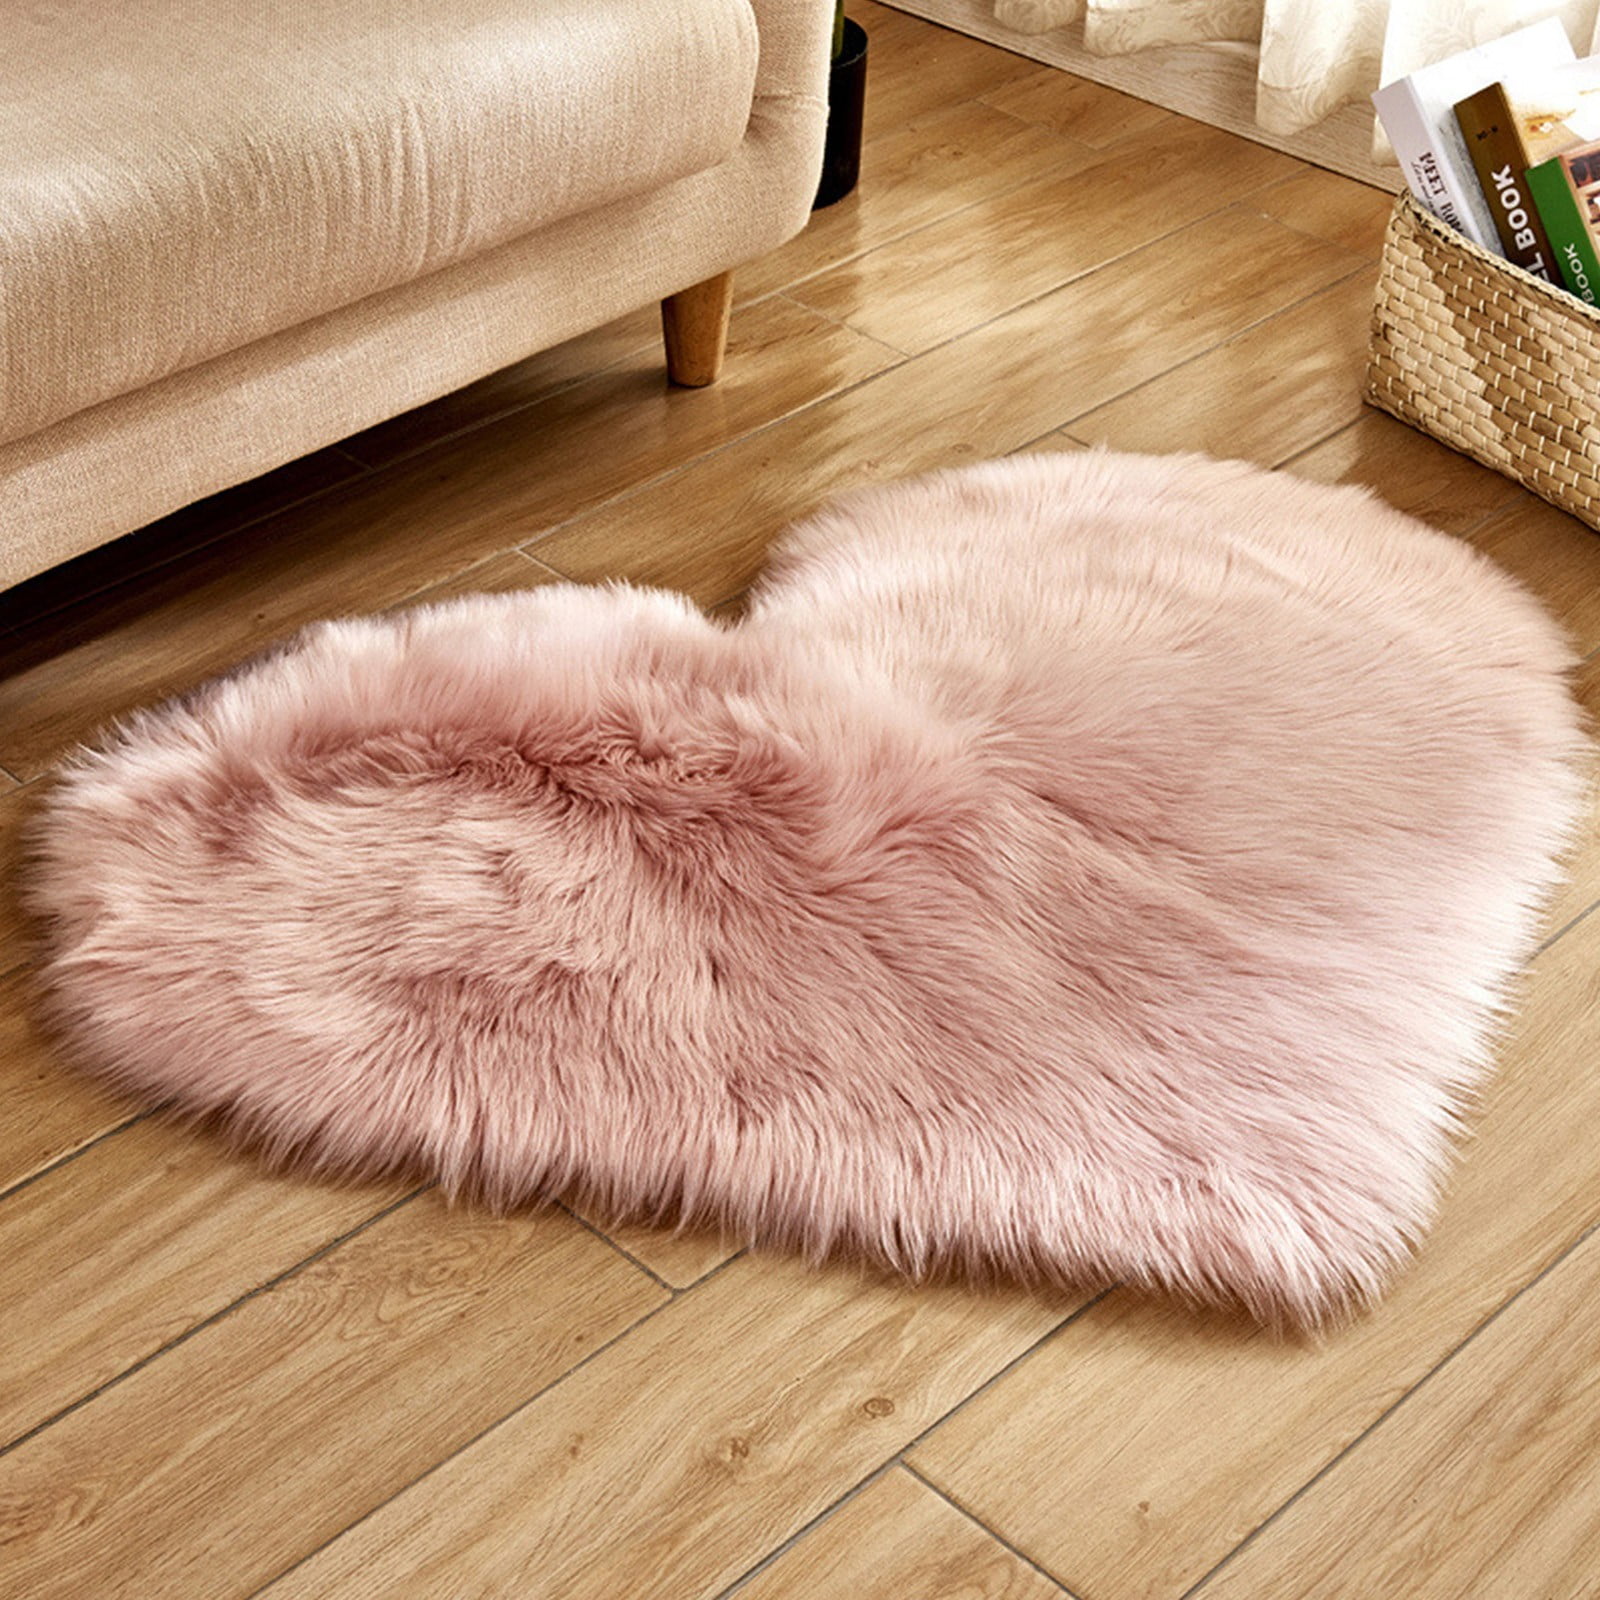 Bedroom Floor Plush Anti-Skid Warm Carpet for Living Room Area 122 cm x 183 cm Mind Reader Faux Sheepskin Rug Beige High Pile 4′ x 6′ Vegan Materials 